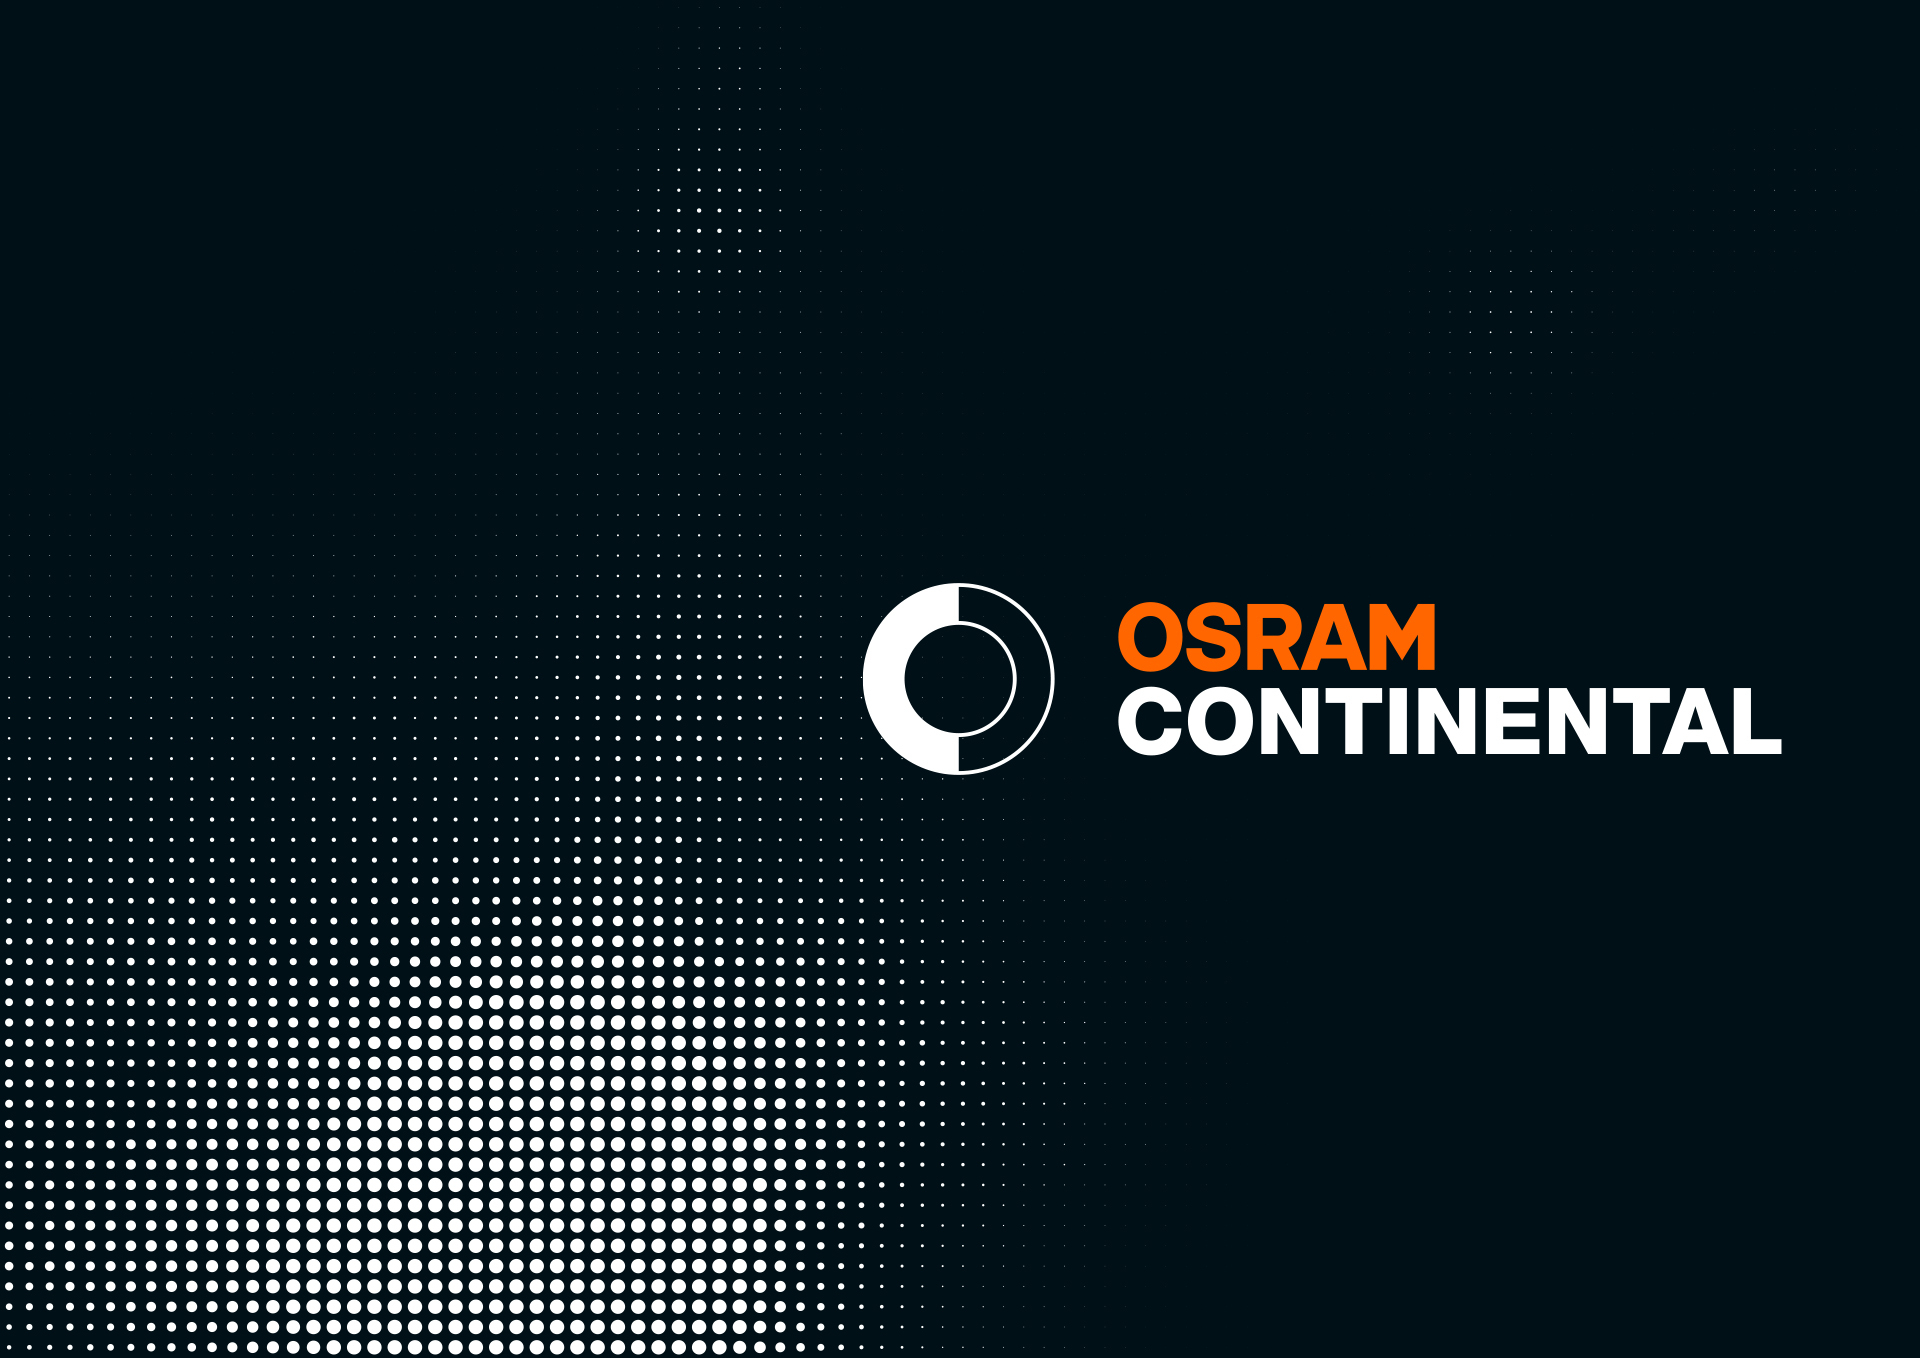 A brilliant joint venture, OSRAM Continental